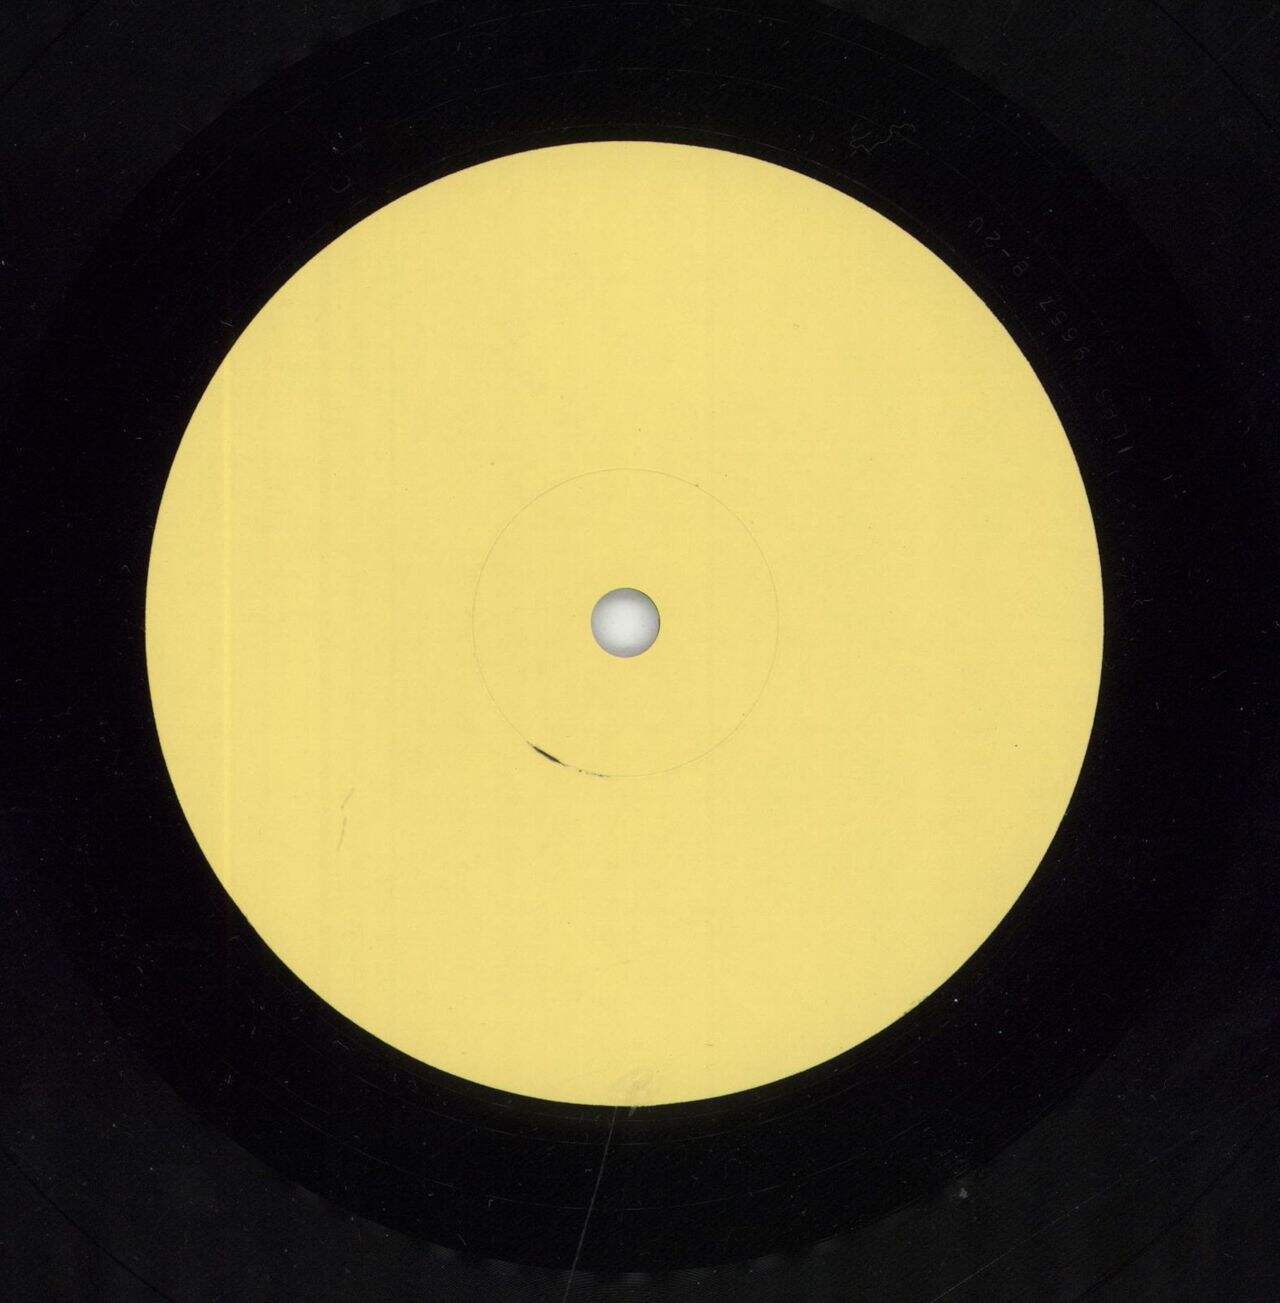 Todd Rundgren Healing - Test Pressing UK 2-LP vinyl set